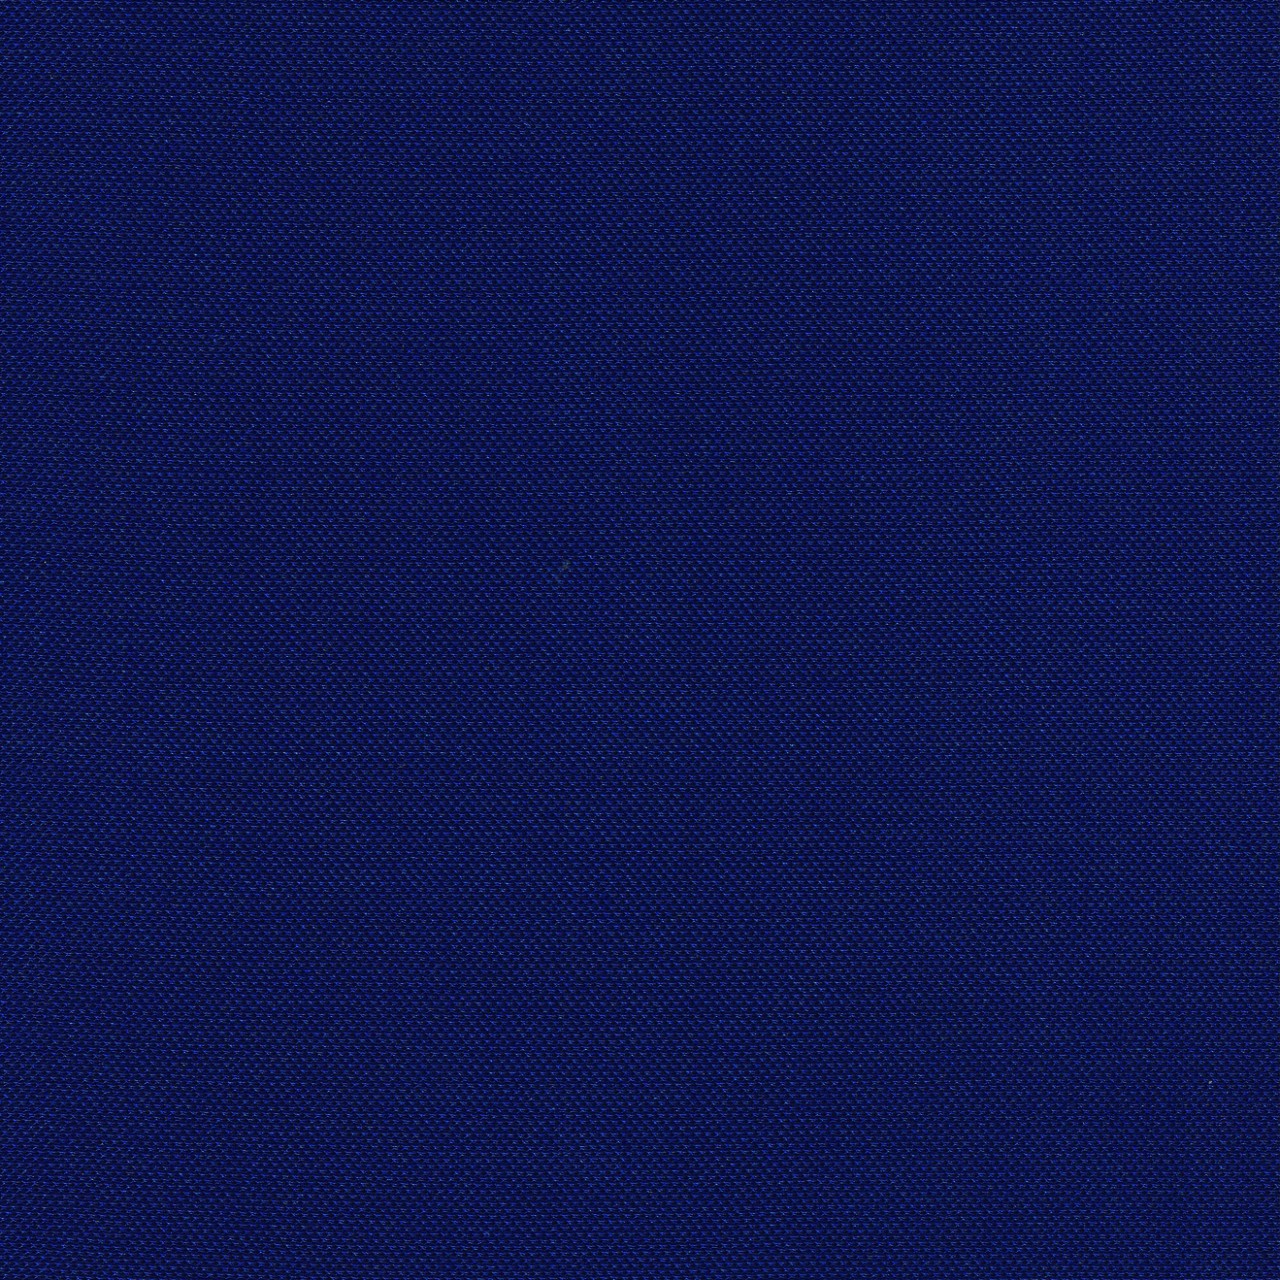 Swatch 8804 Sapphire